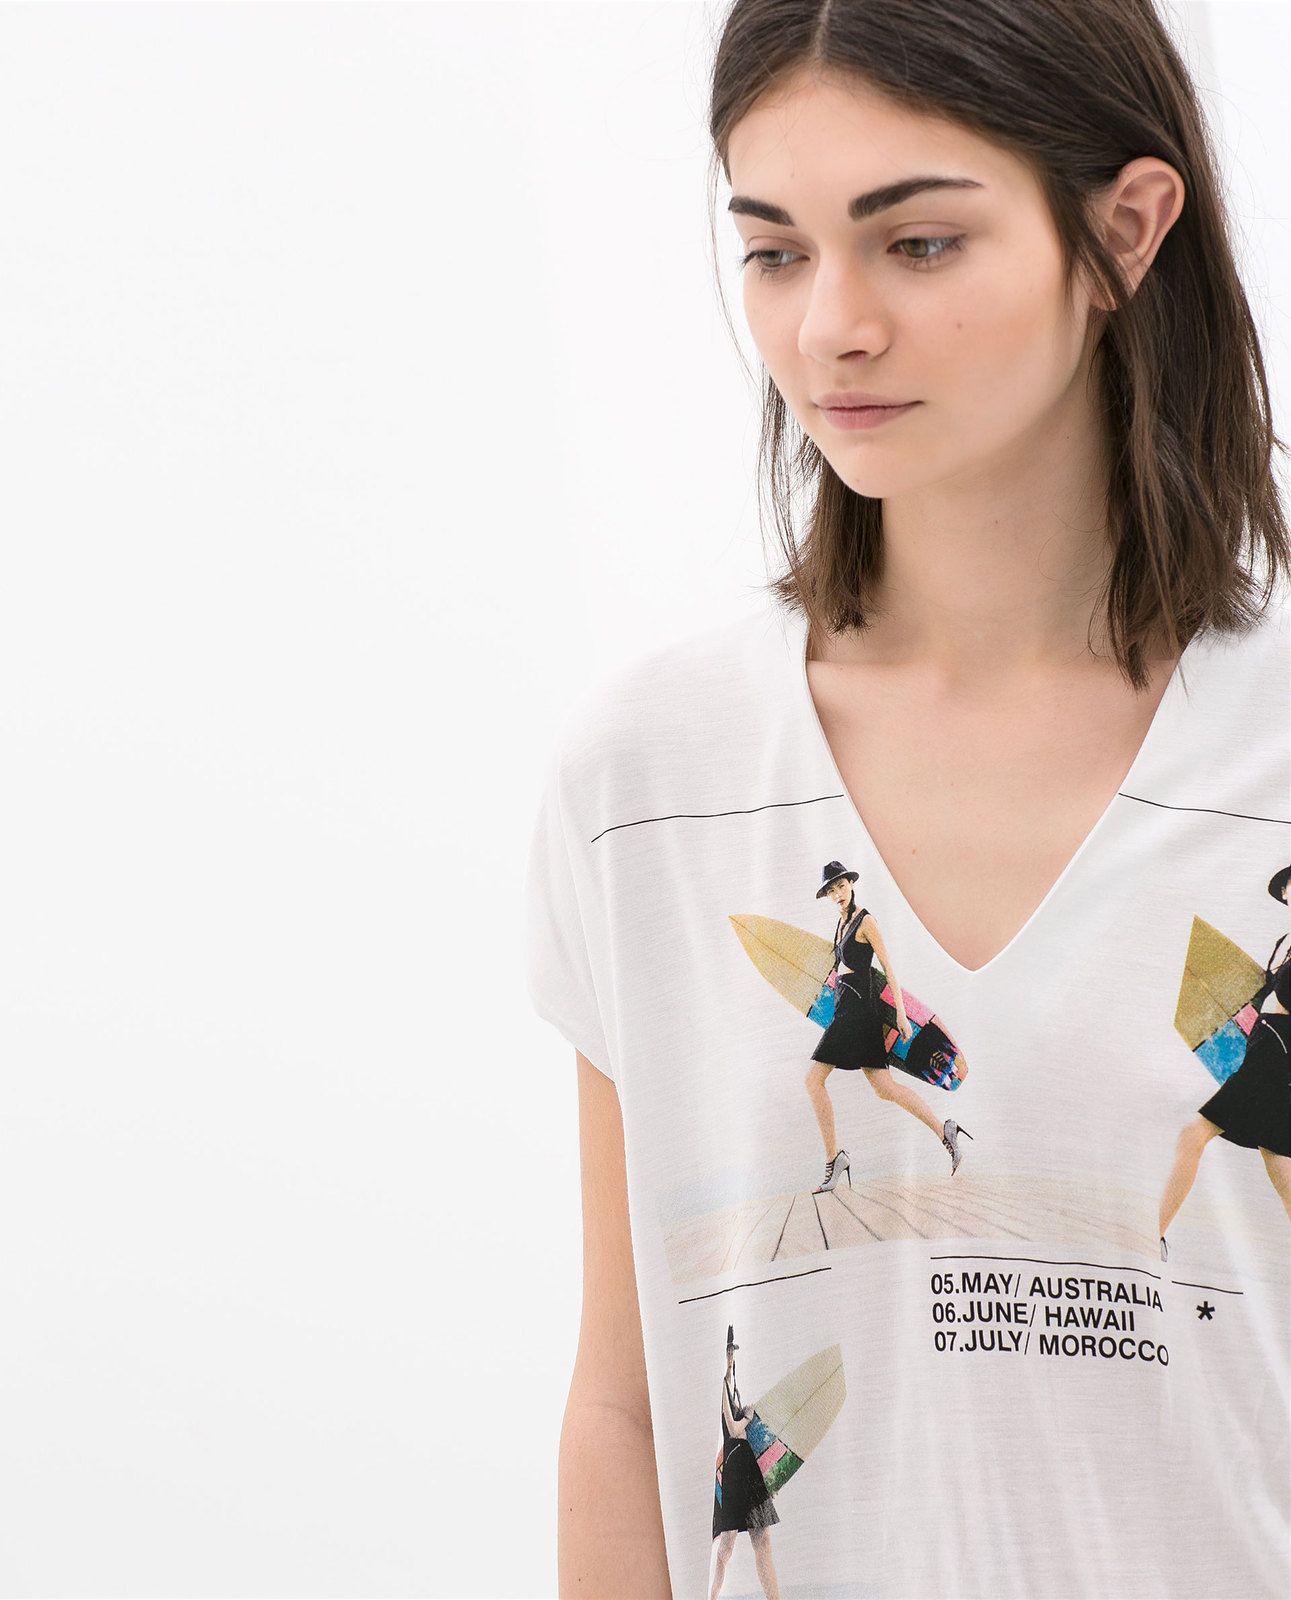 Zara szörfös csajos póló 2014.4.16 #56433 fotója